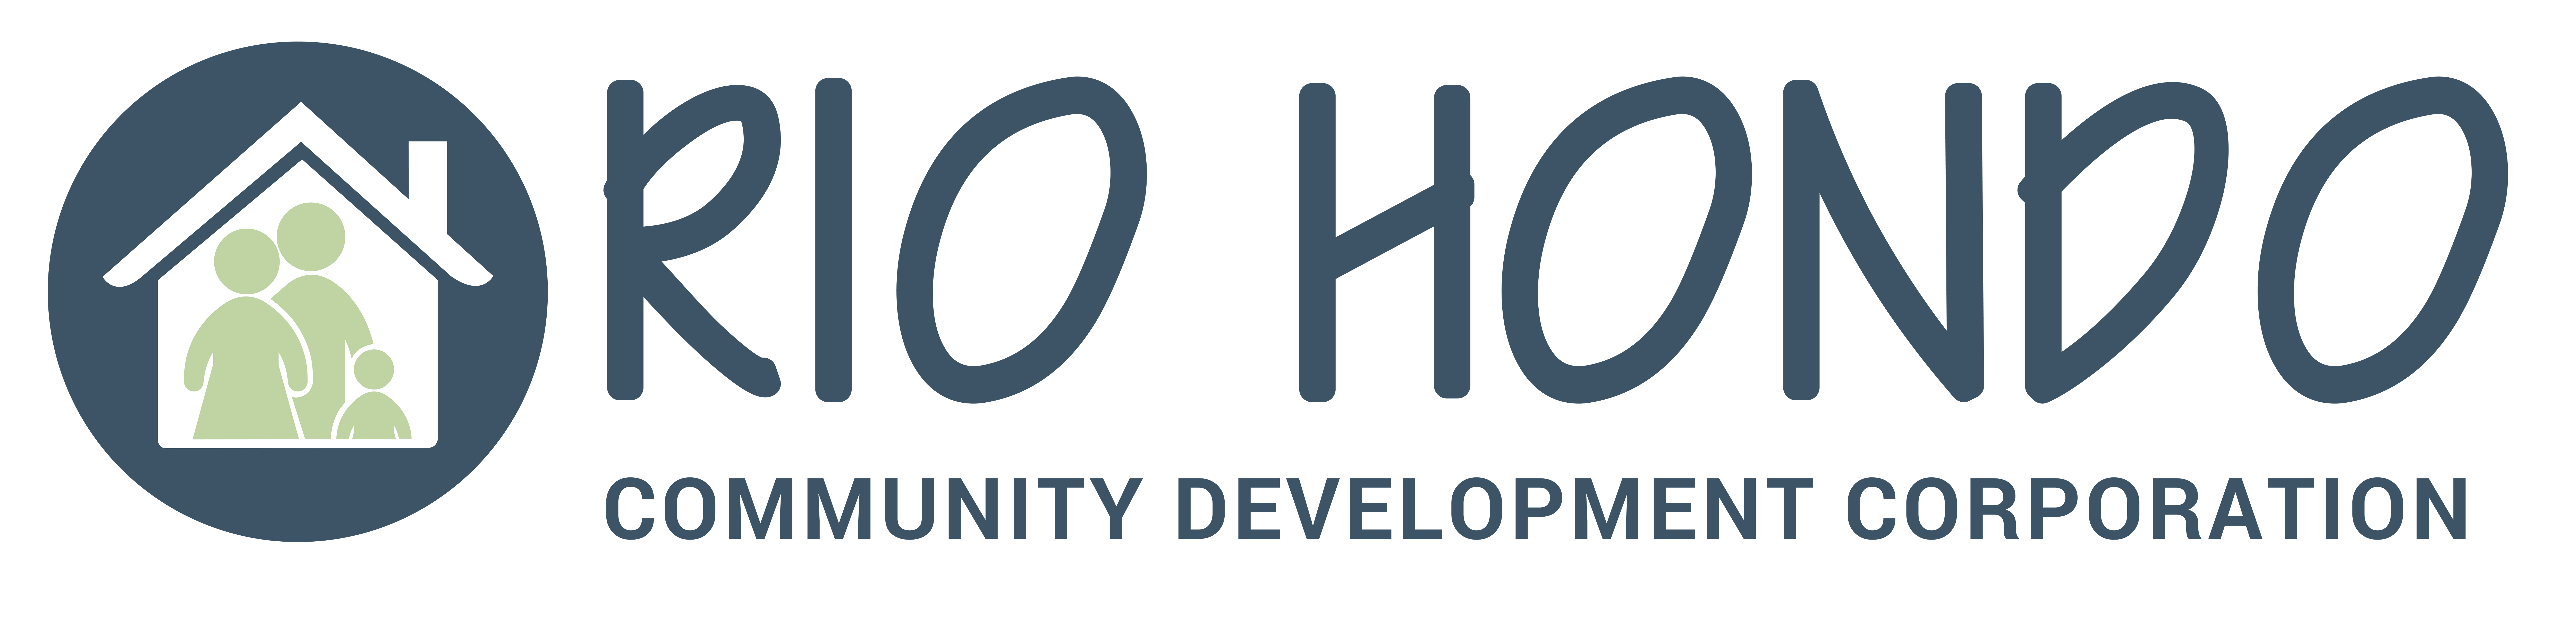 Rio Hondo Community Development Corporation